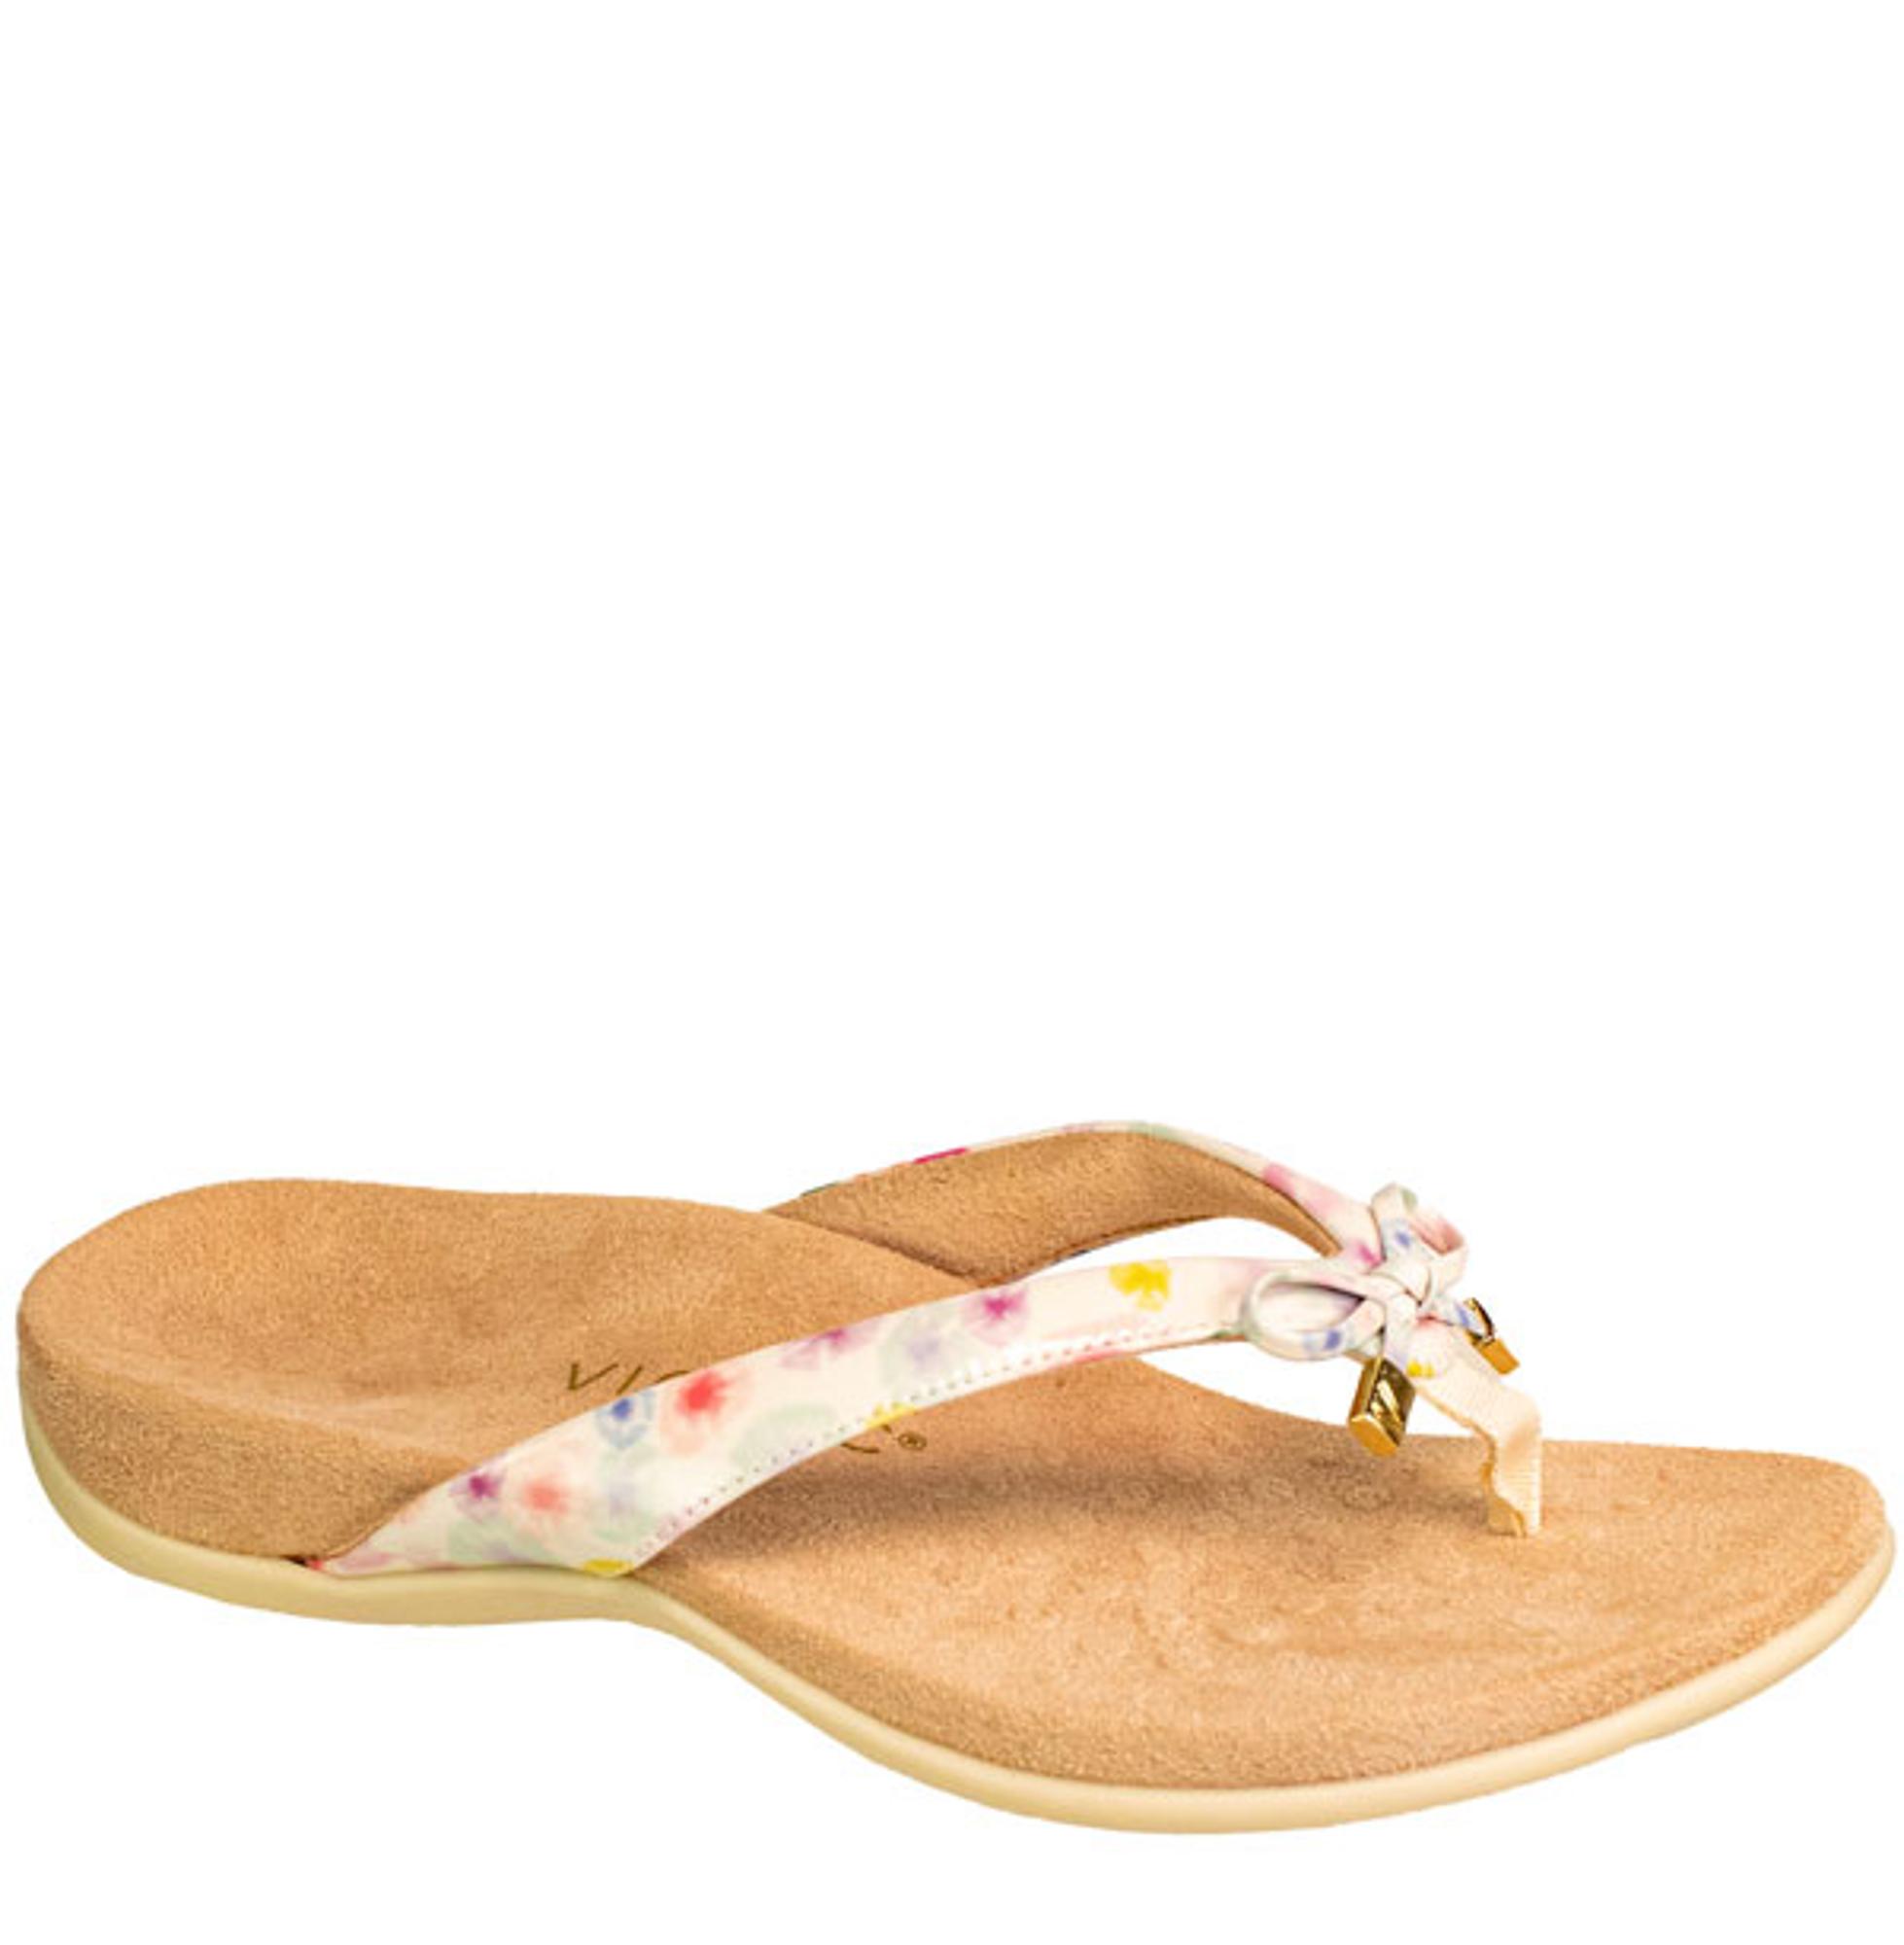 Womens BELLA thong sandal / Cream poppy 